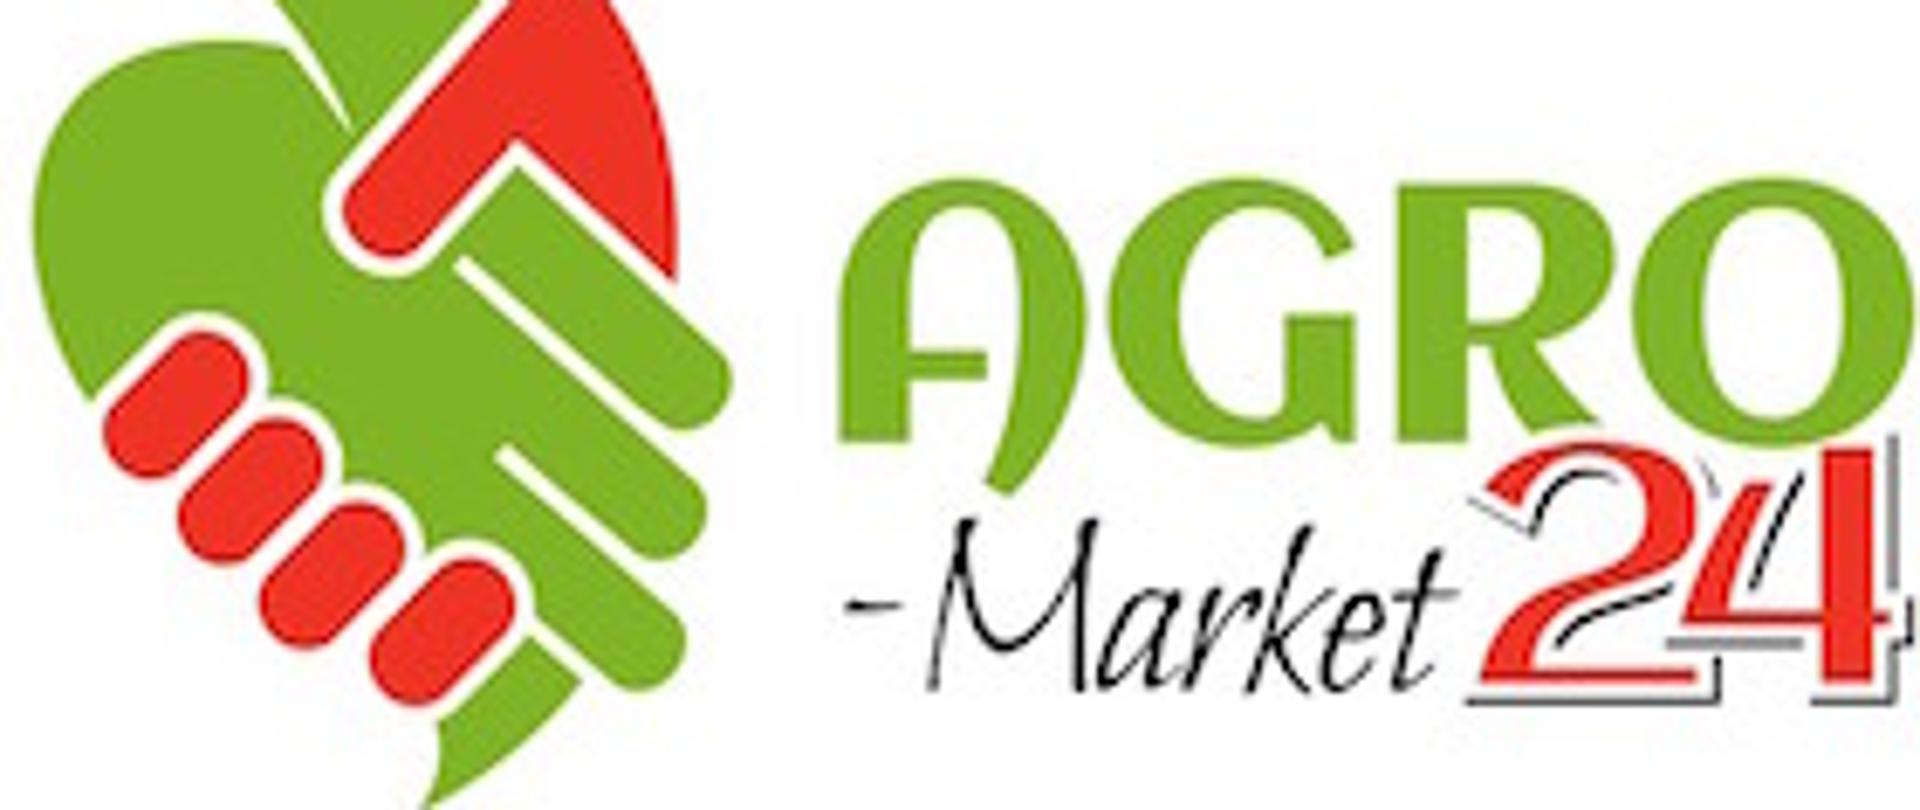 agro market 24 logo FINAL26_06_2017 (1)